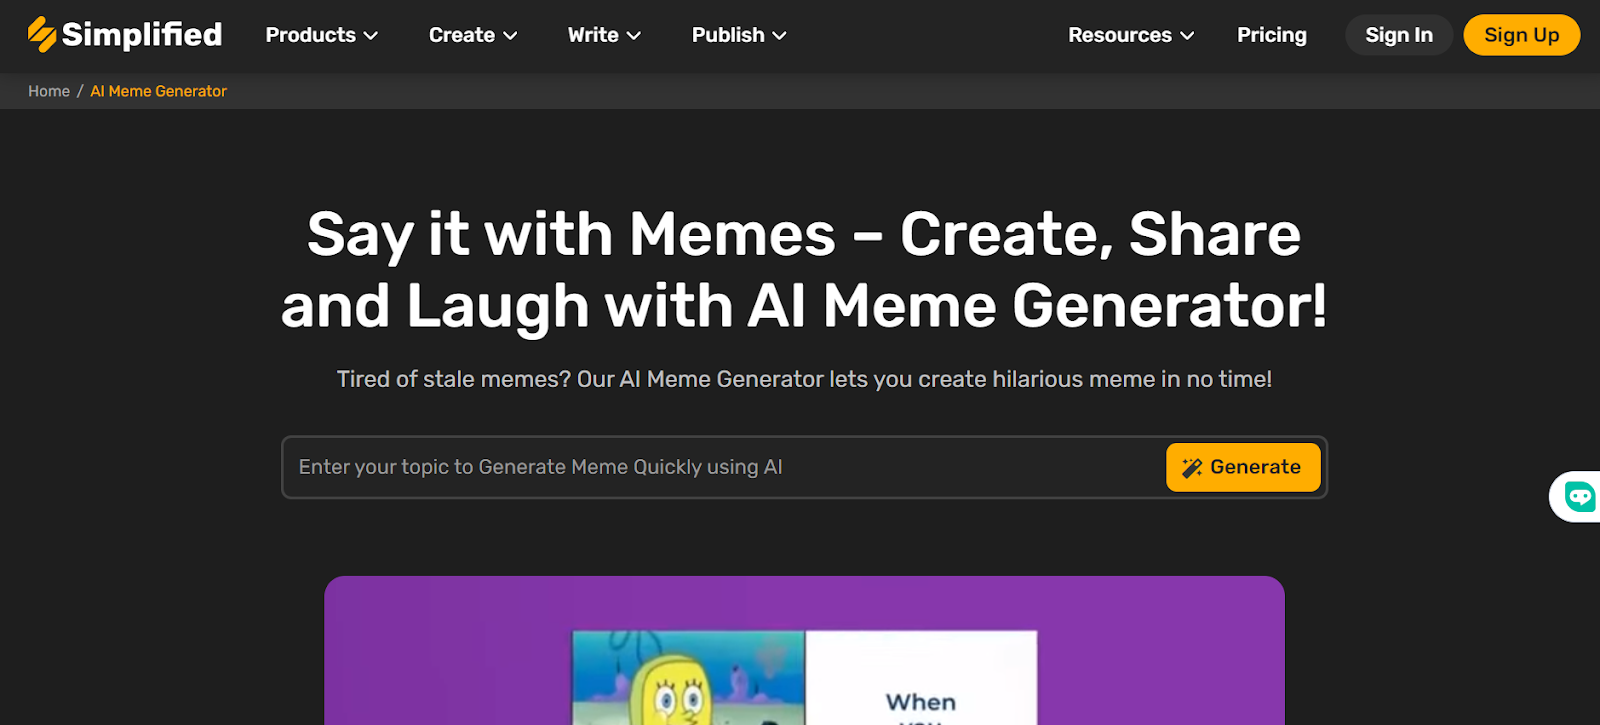 2. Simplified AI Meme Generator - Easy Meme Creator